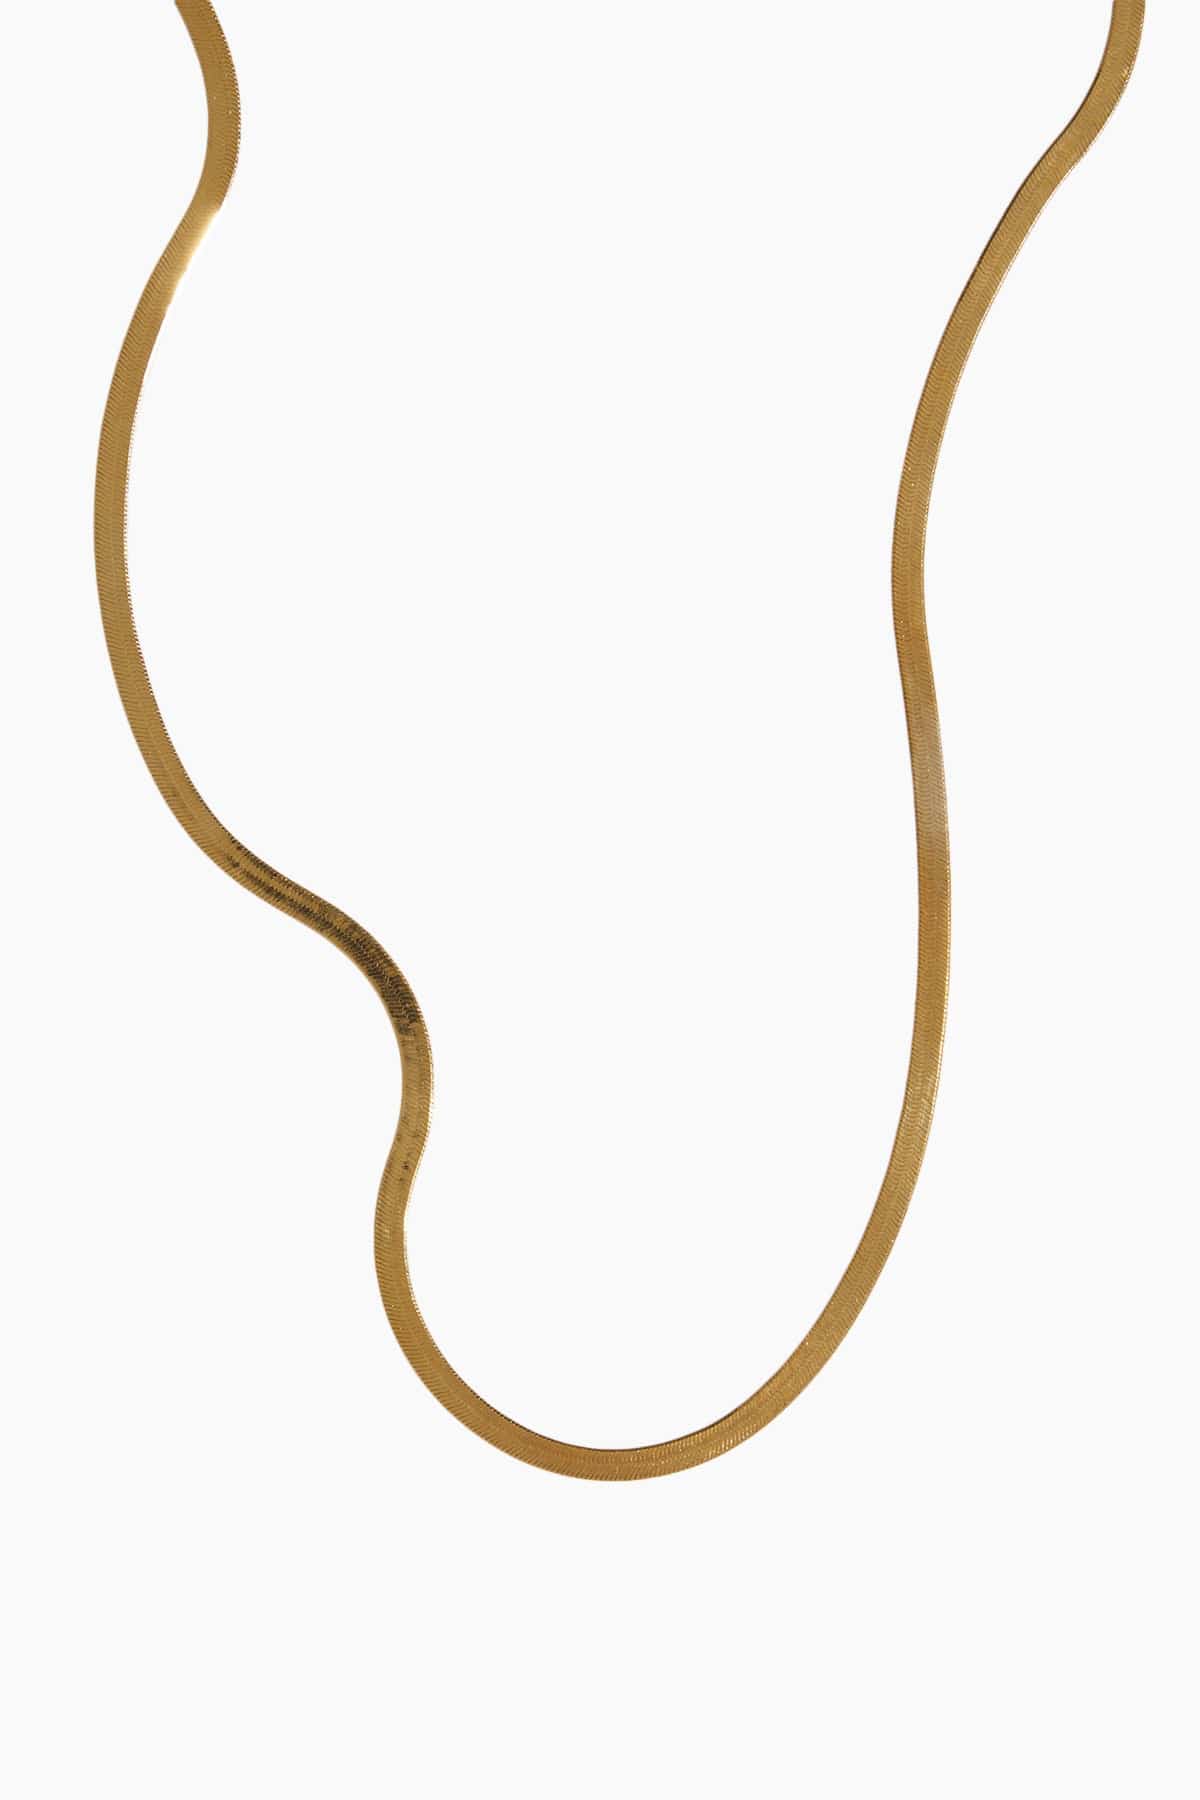 Vintage La Rose 18 Herringbone Chain in 10K Gold" - Size: One size